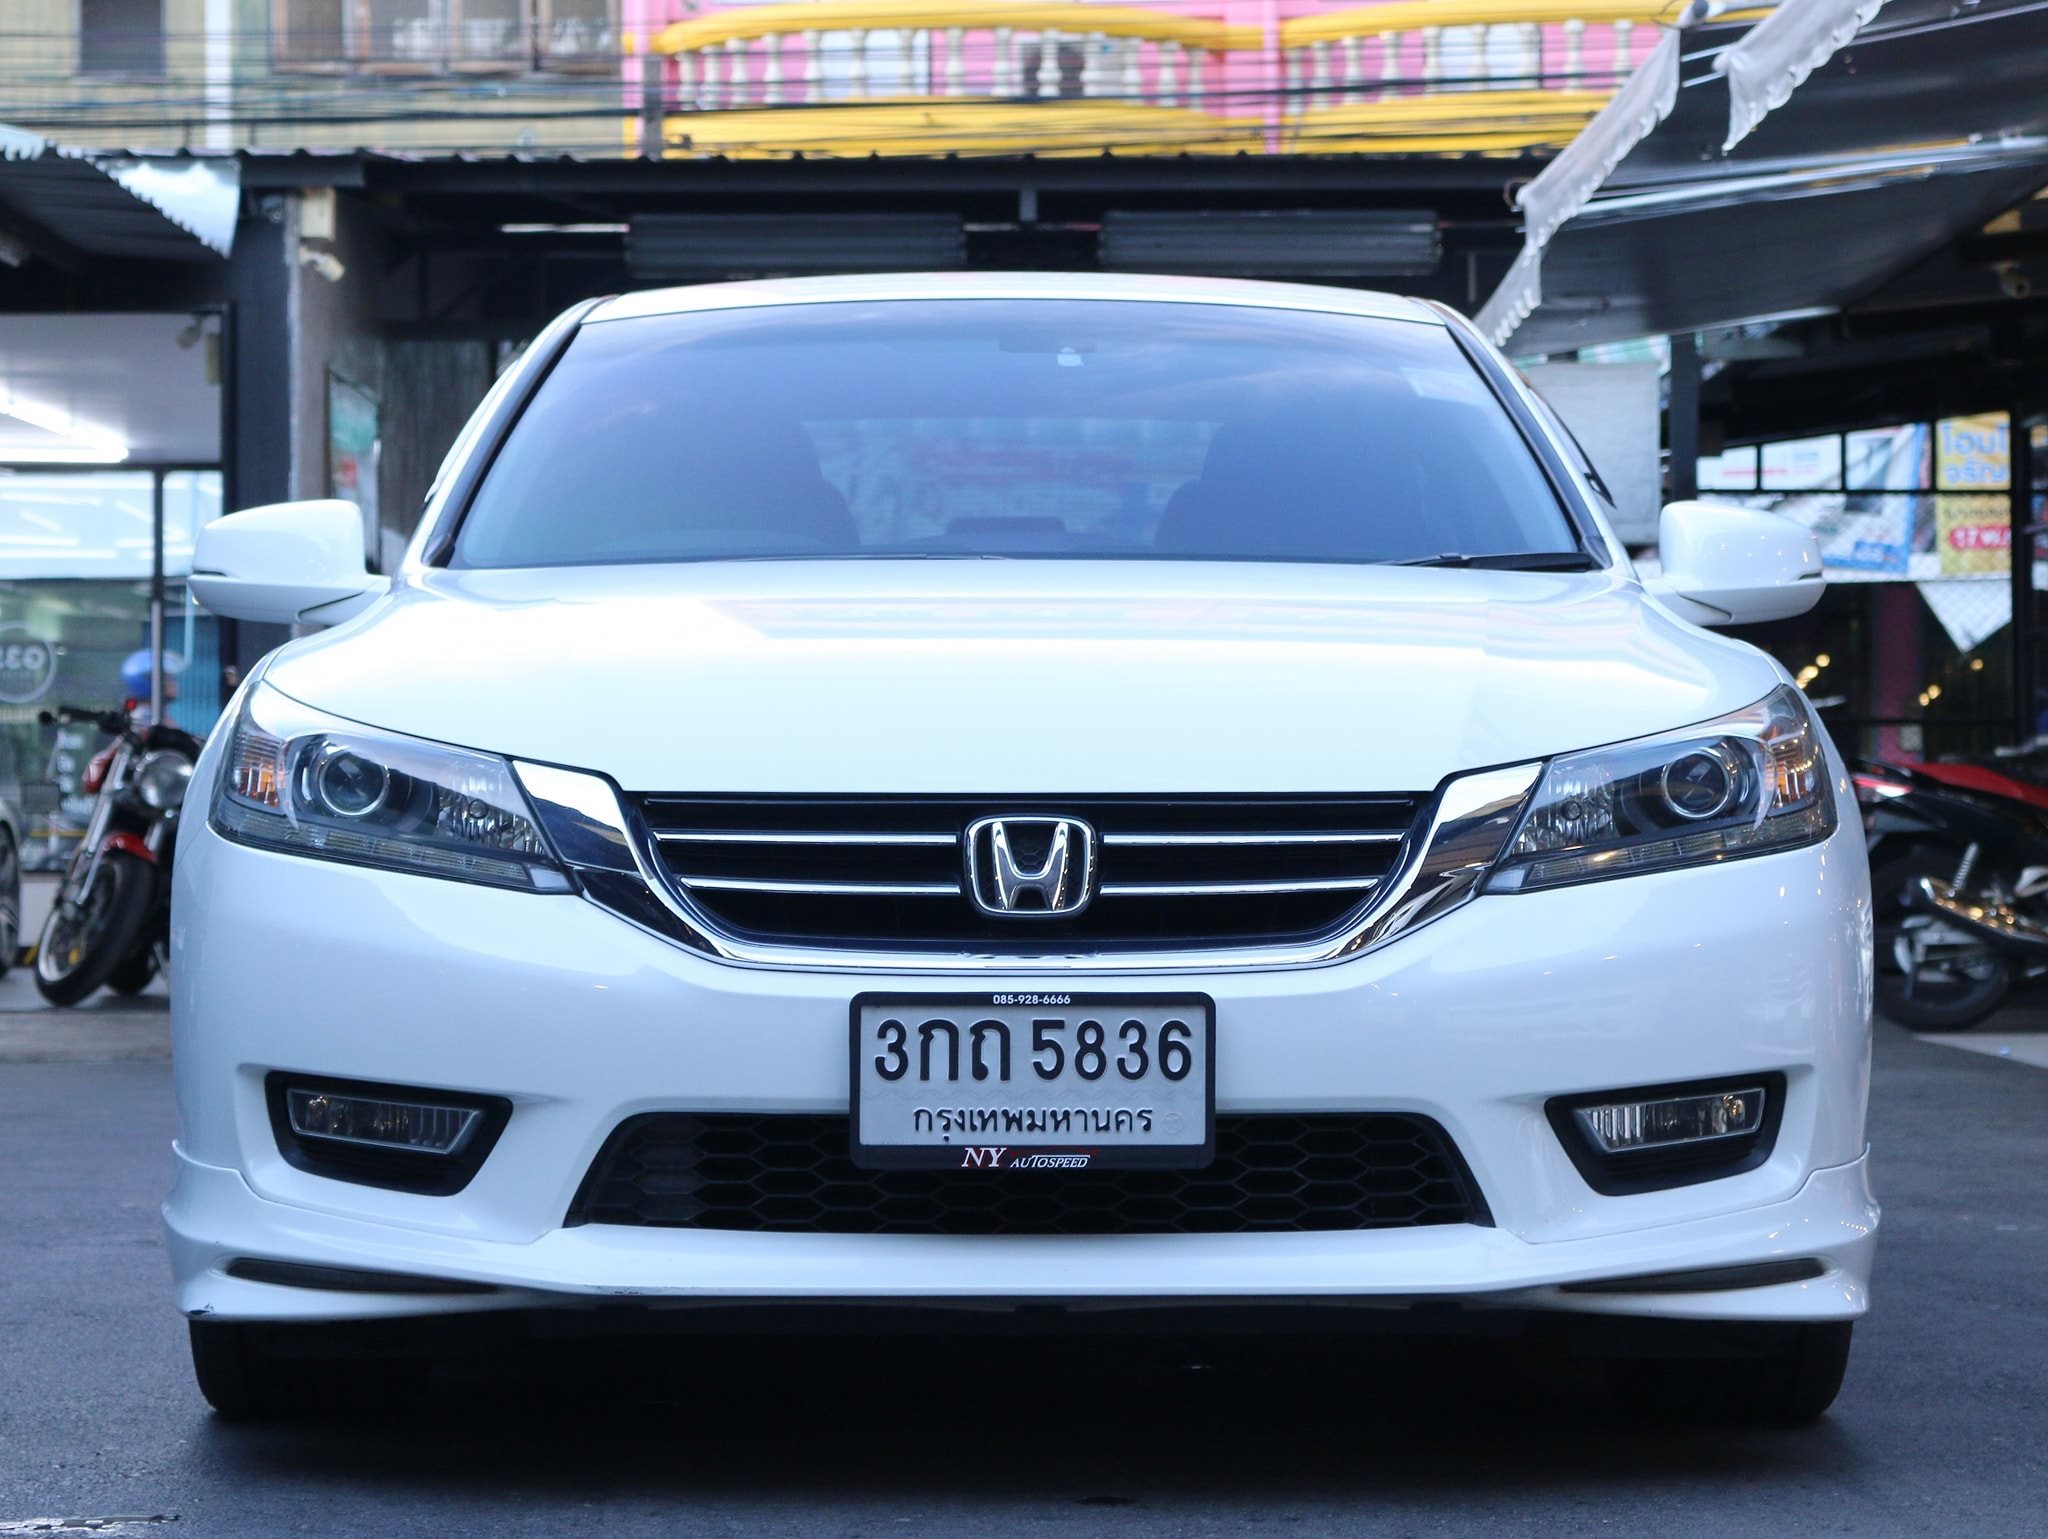 Honda Accord Gen 9 ปี 2014 สีขาว